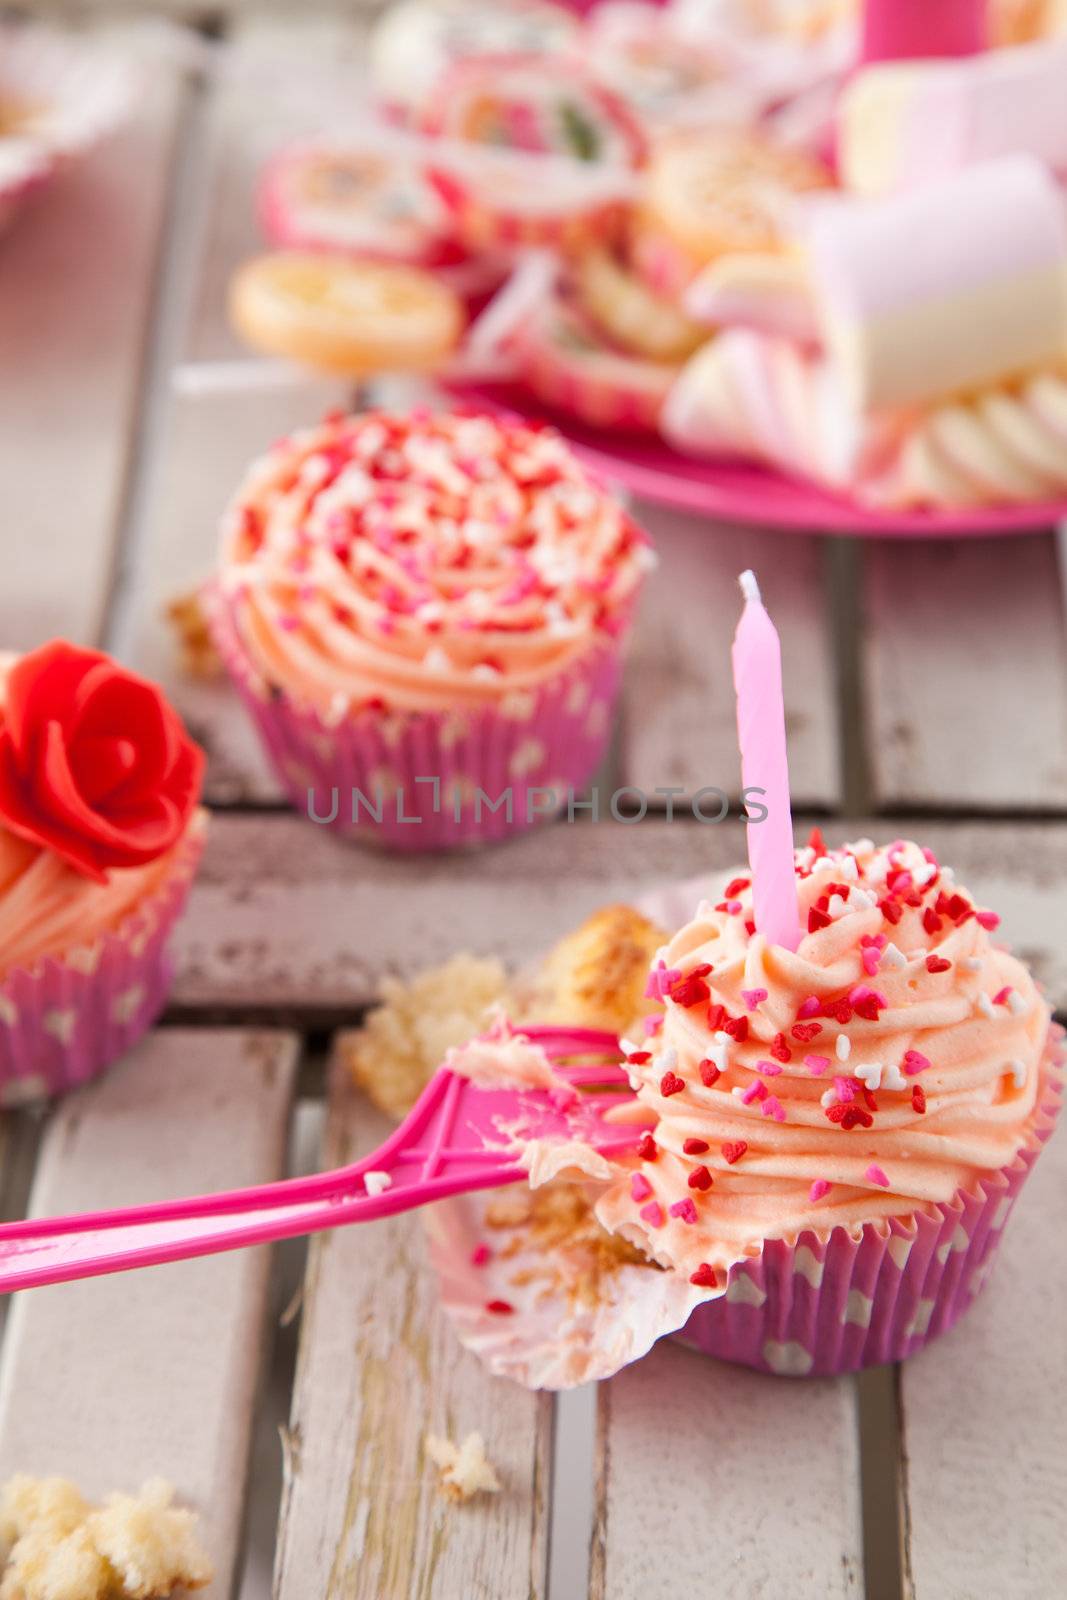 Birthday cupcakes by Fotosmurf